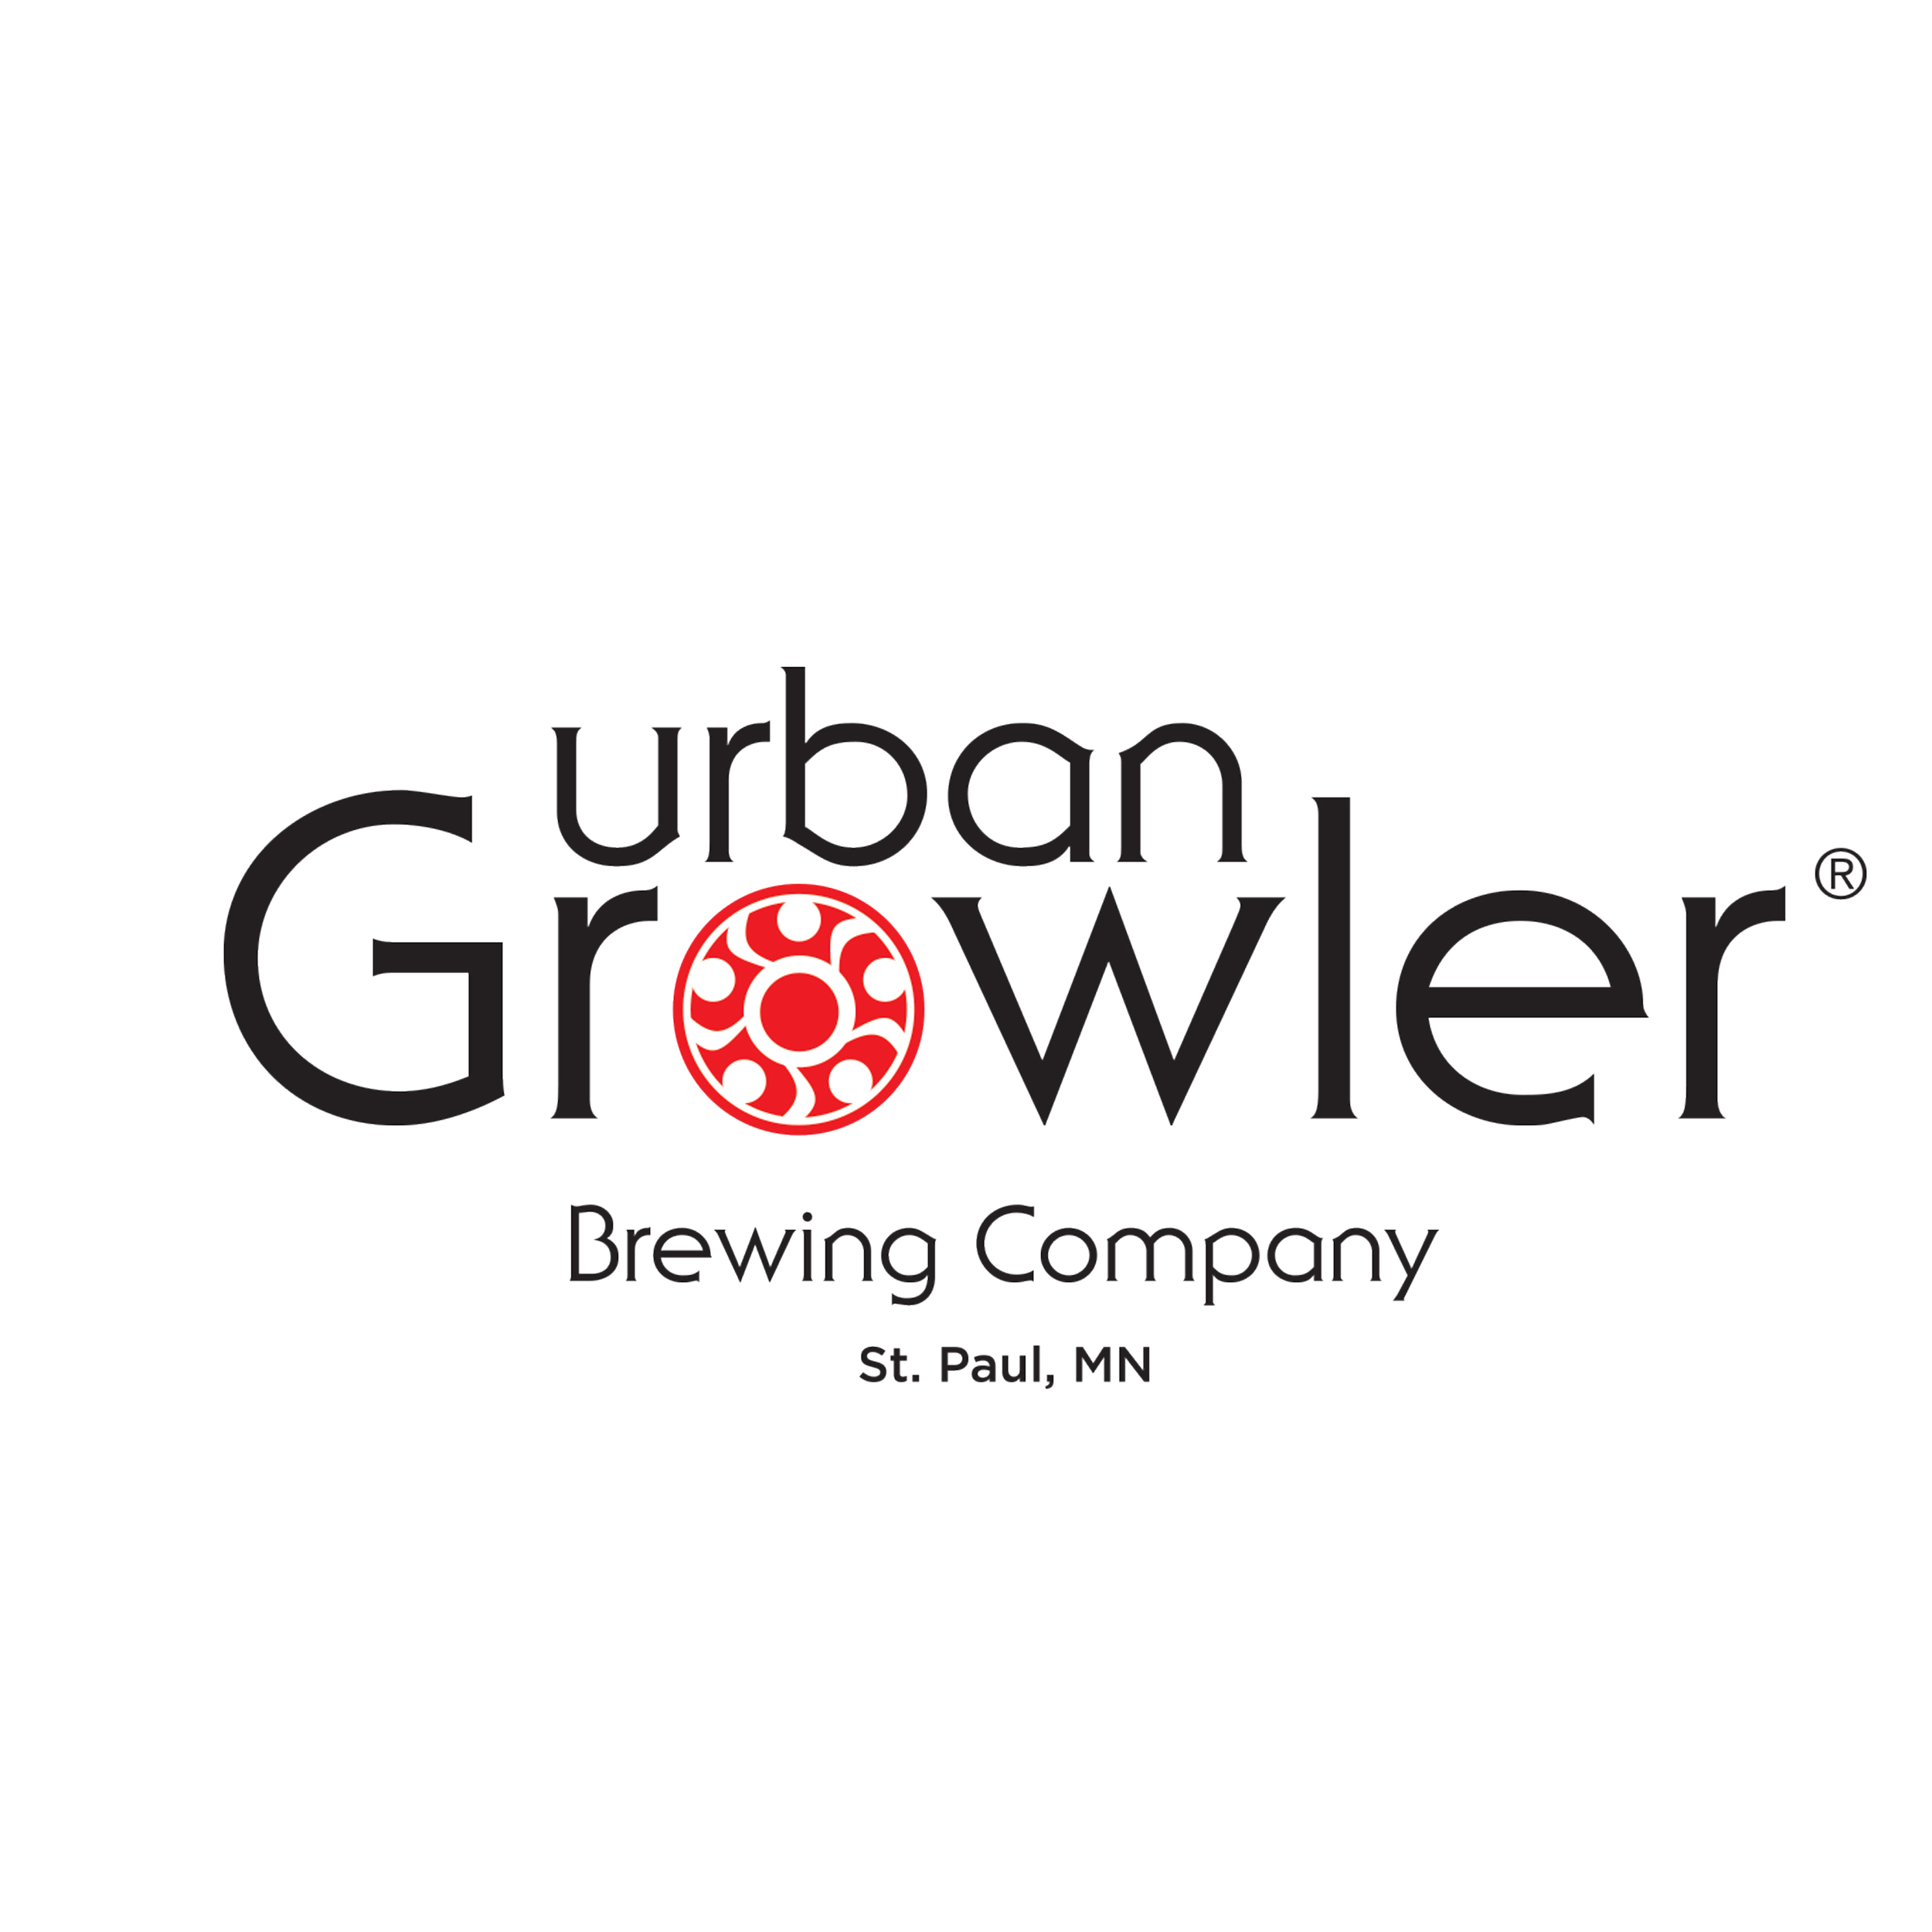 urban-growler-circle-R-logo-st.-paul